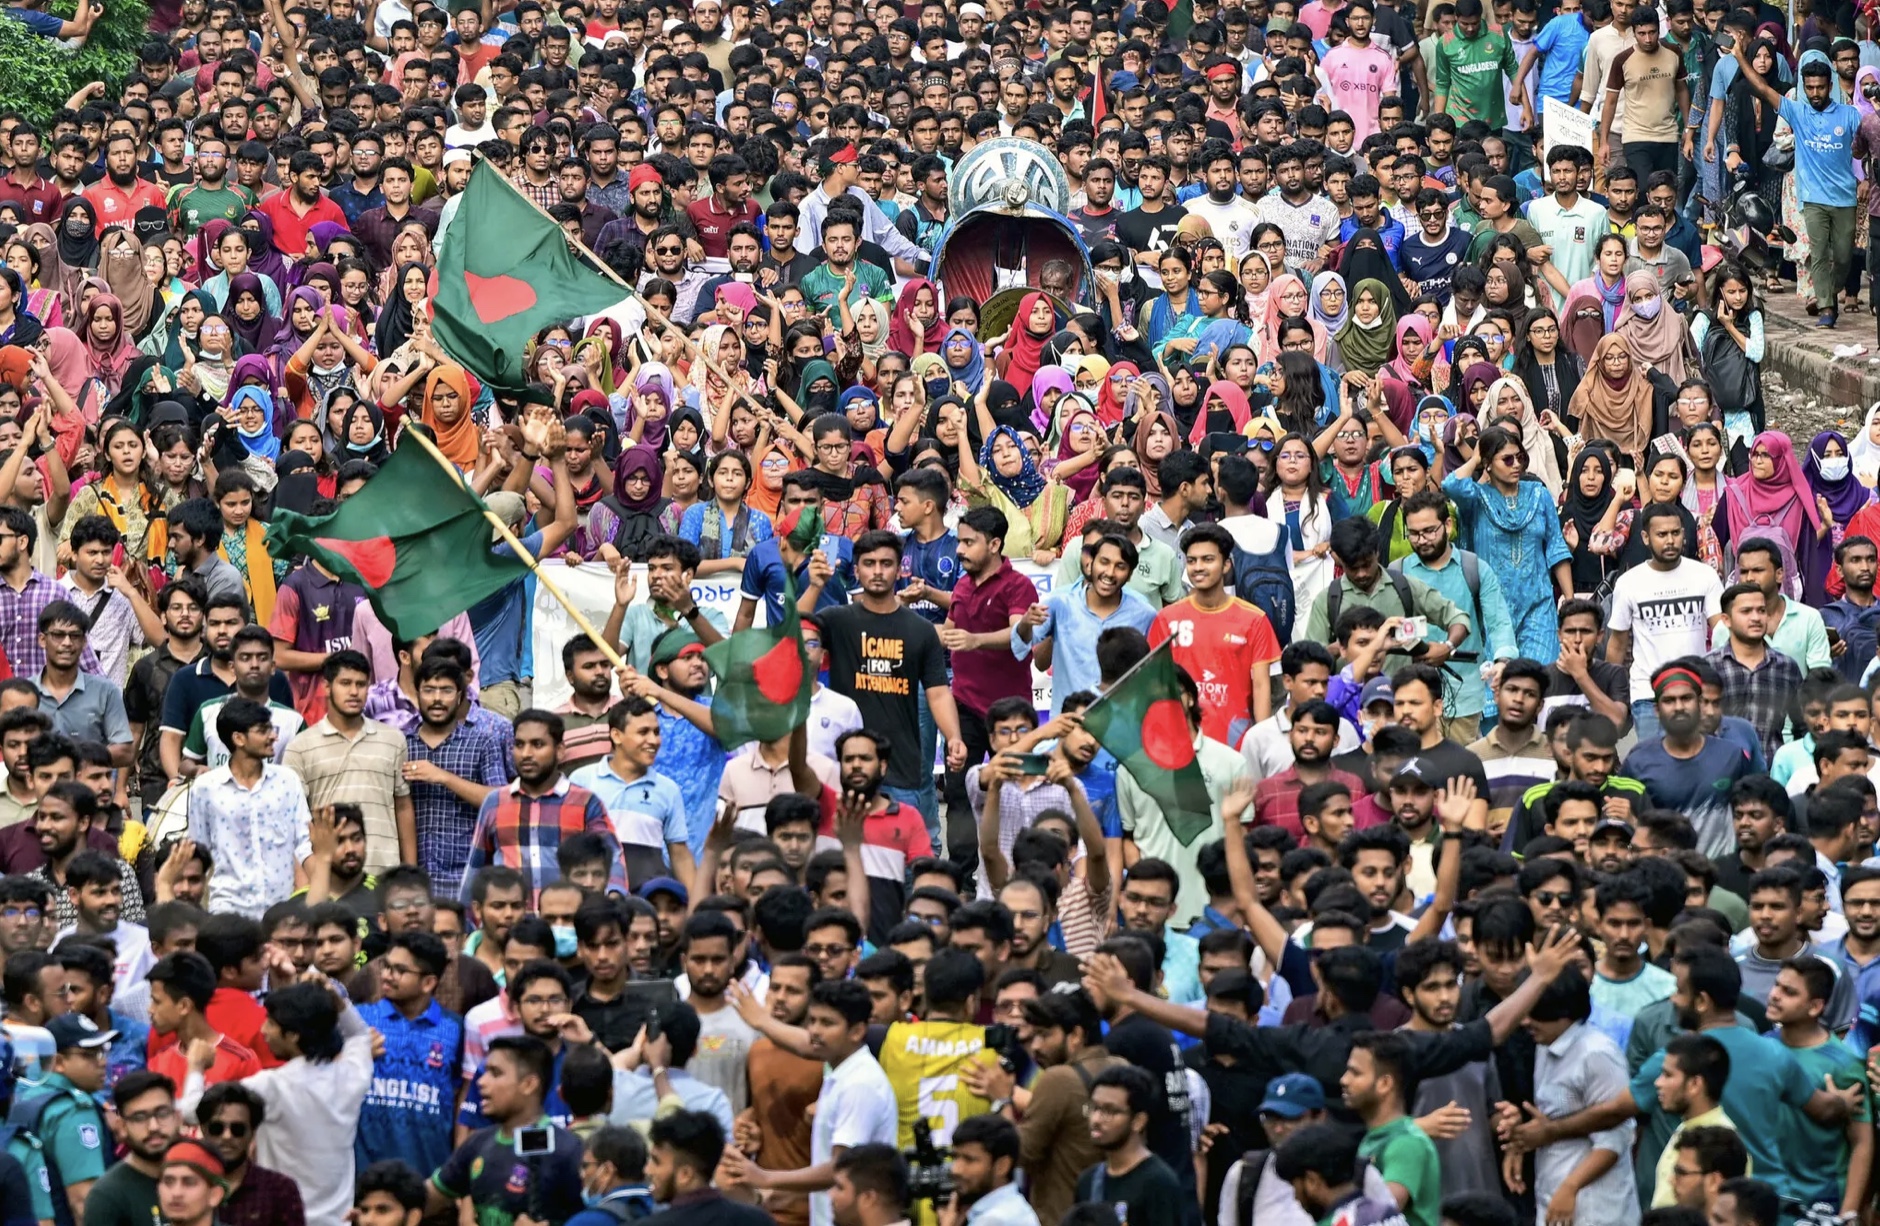 large group of protestors in Bangladesh, India